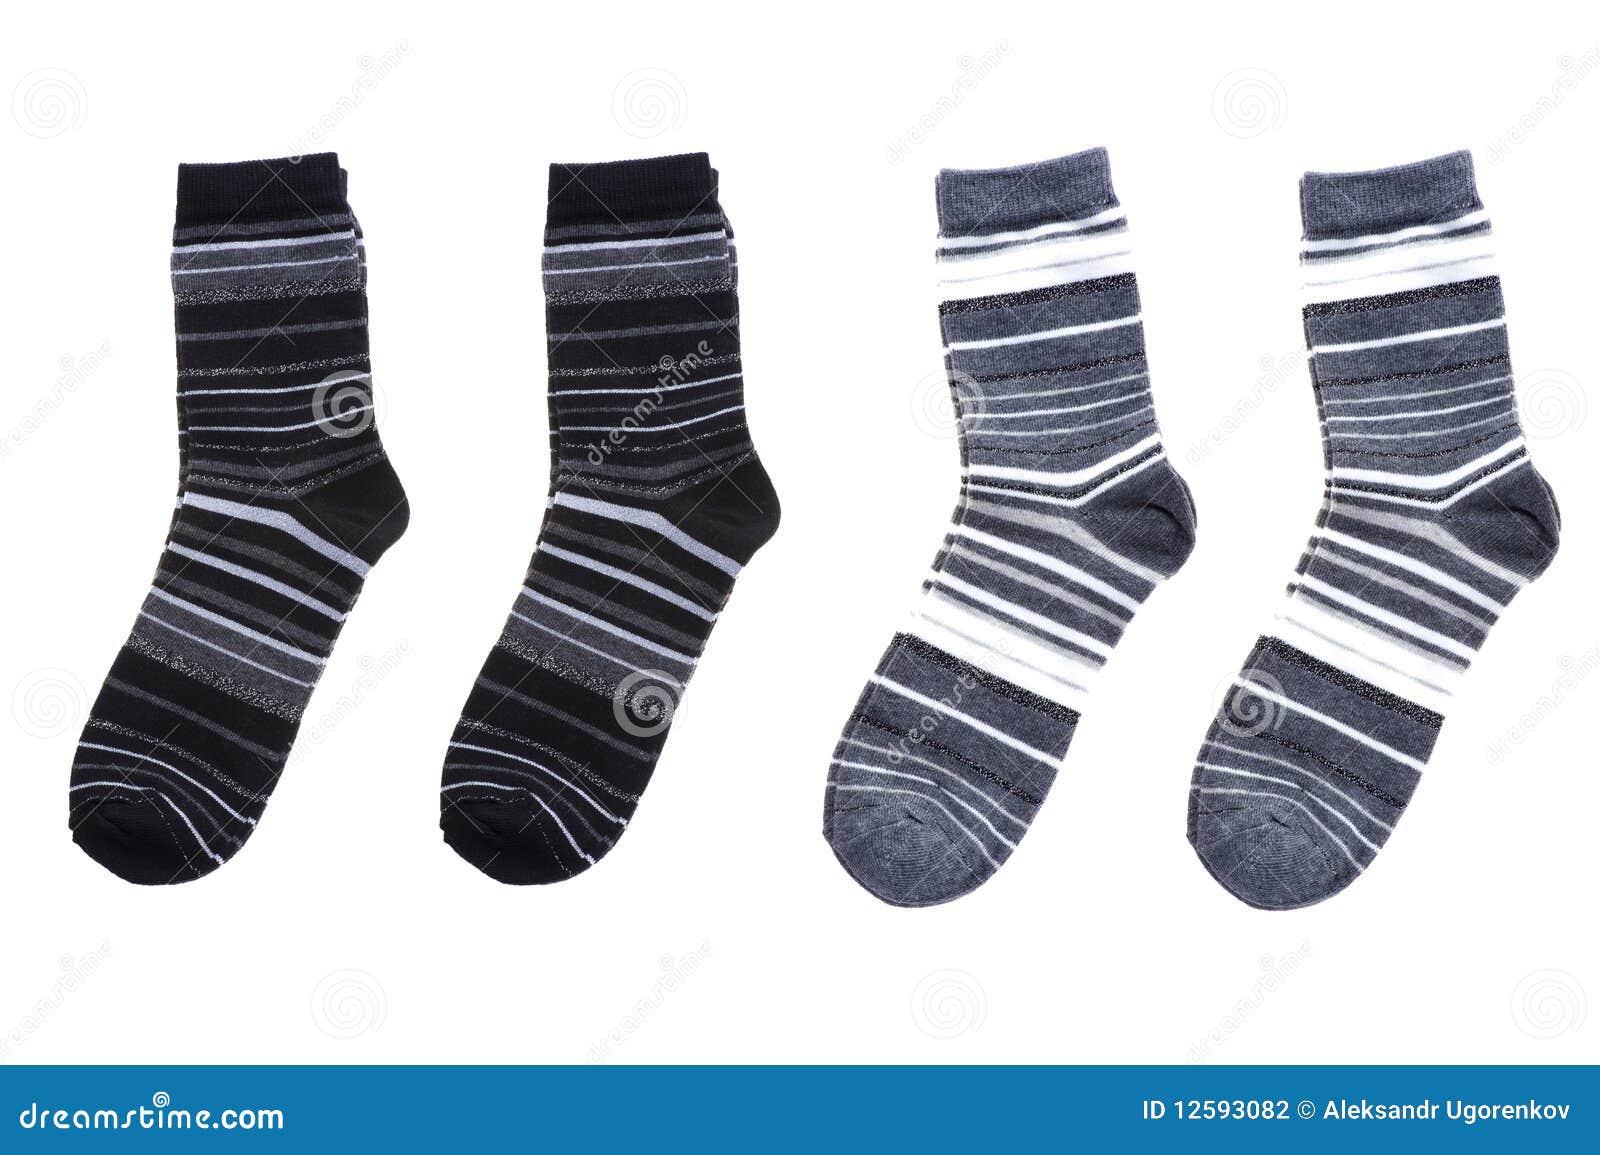 Wool socks stock photo. Image of cloth, arrange, clothes - 12593082